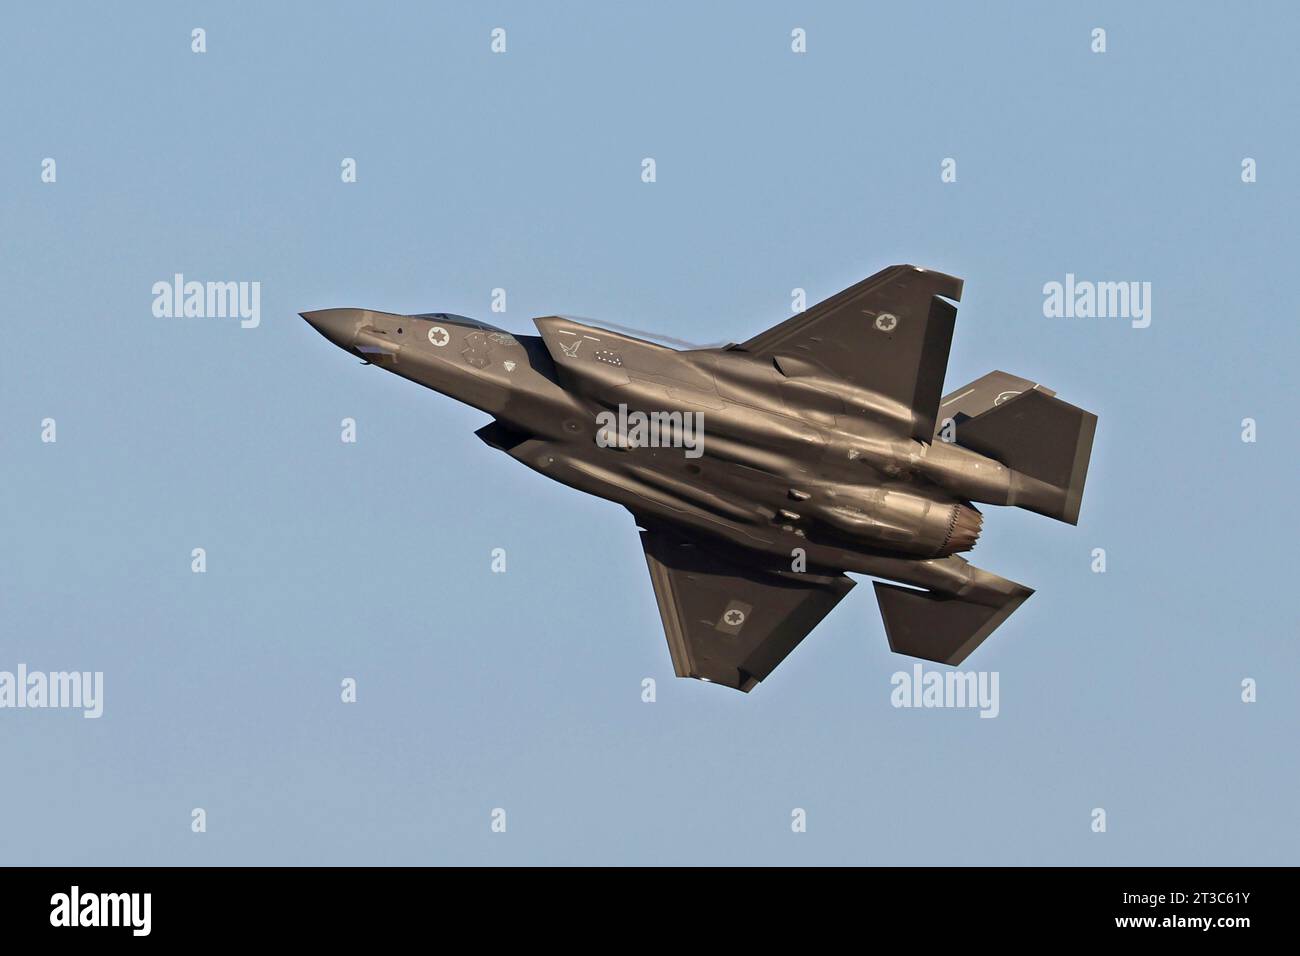 F-35 Adir of the Israeli Air Force in flight. Stock Photo